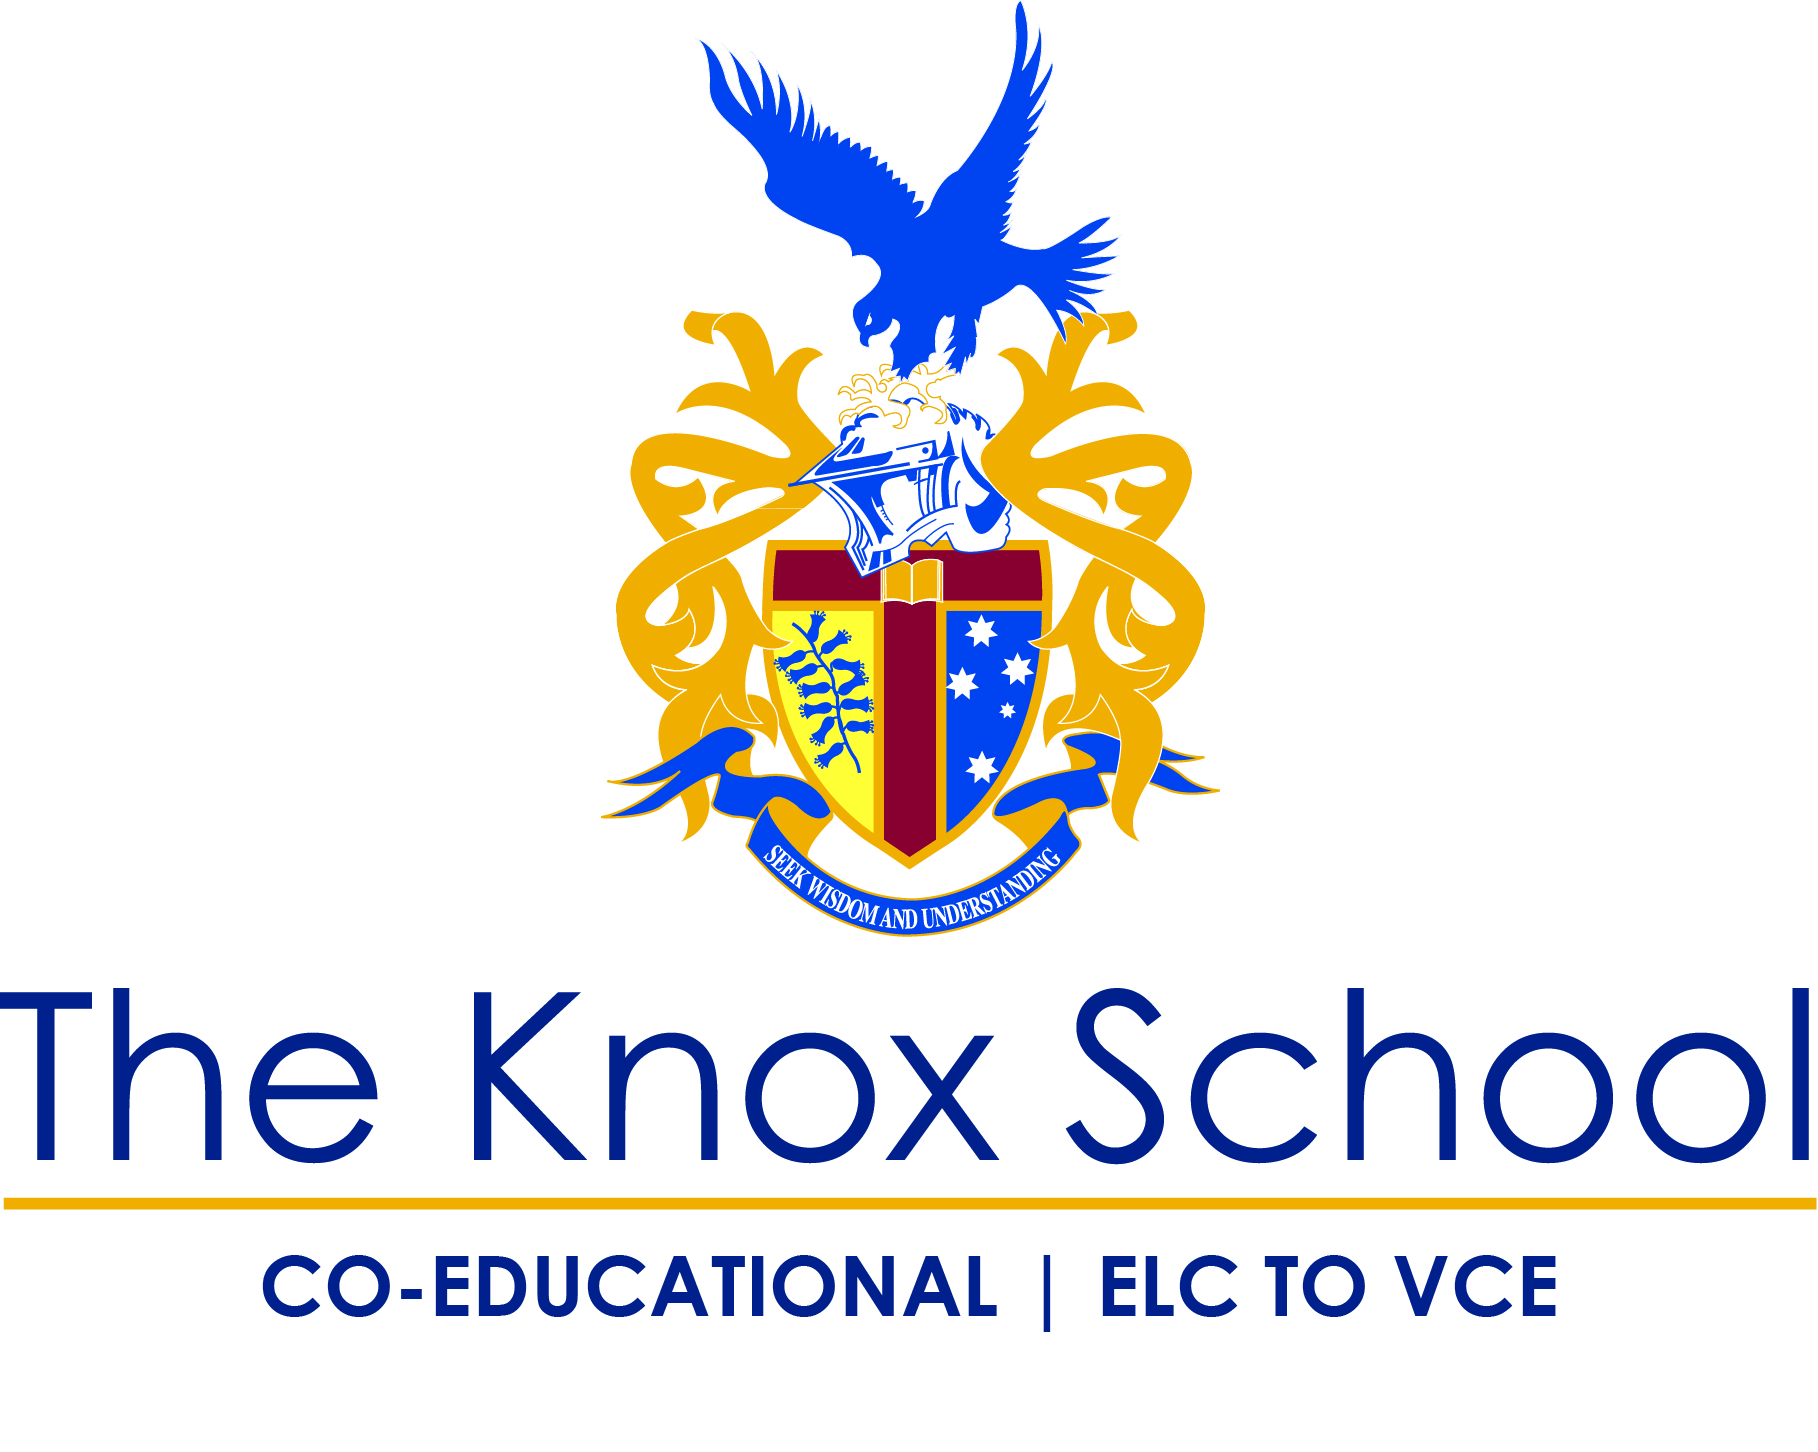 The Knox School